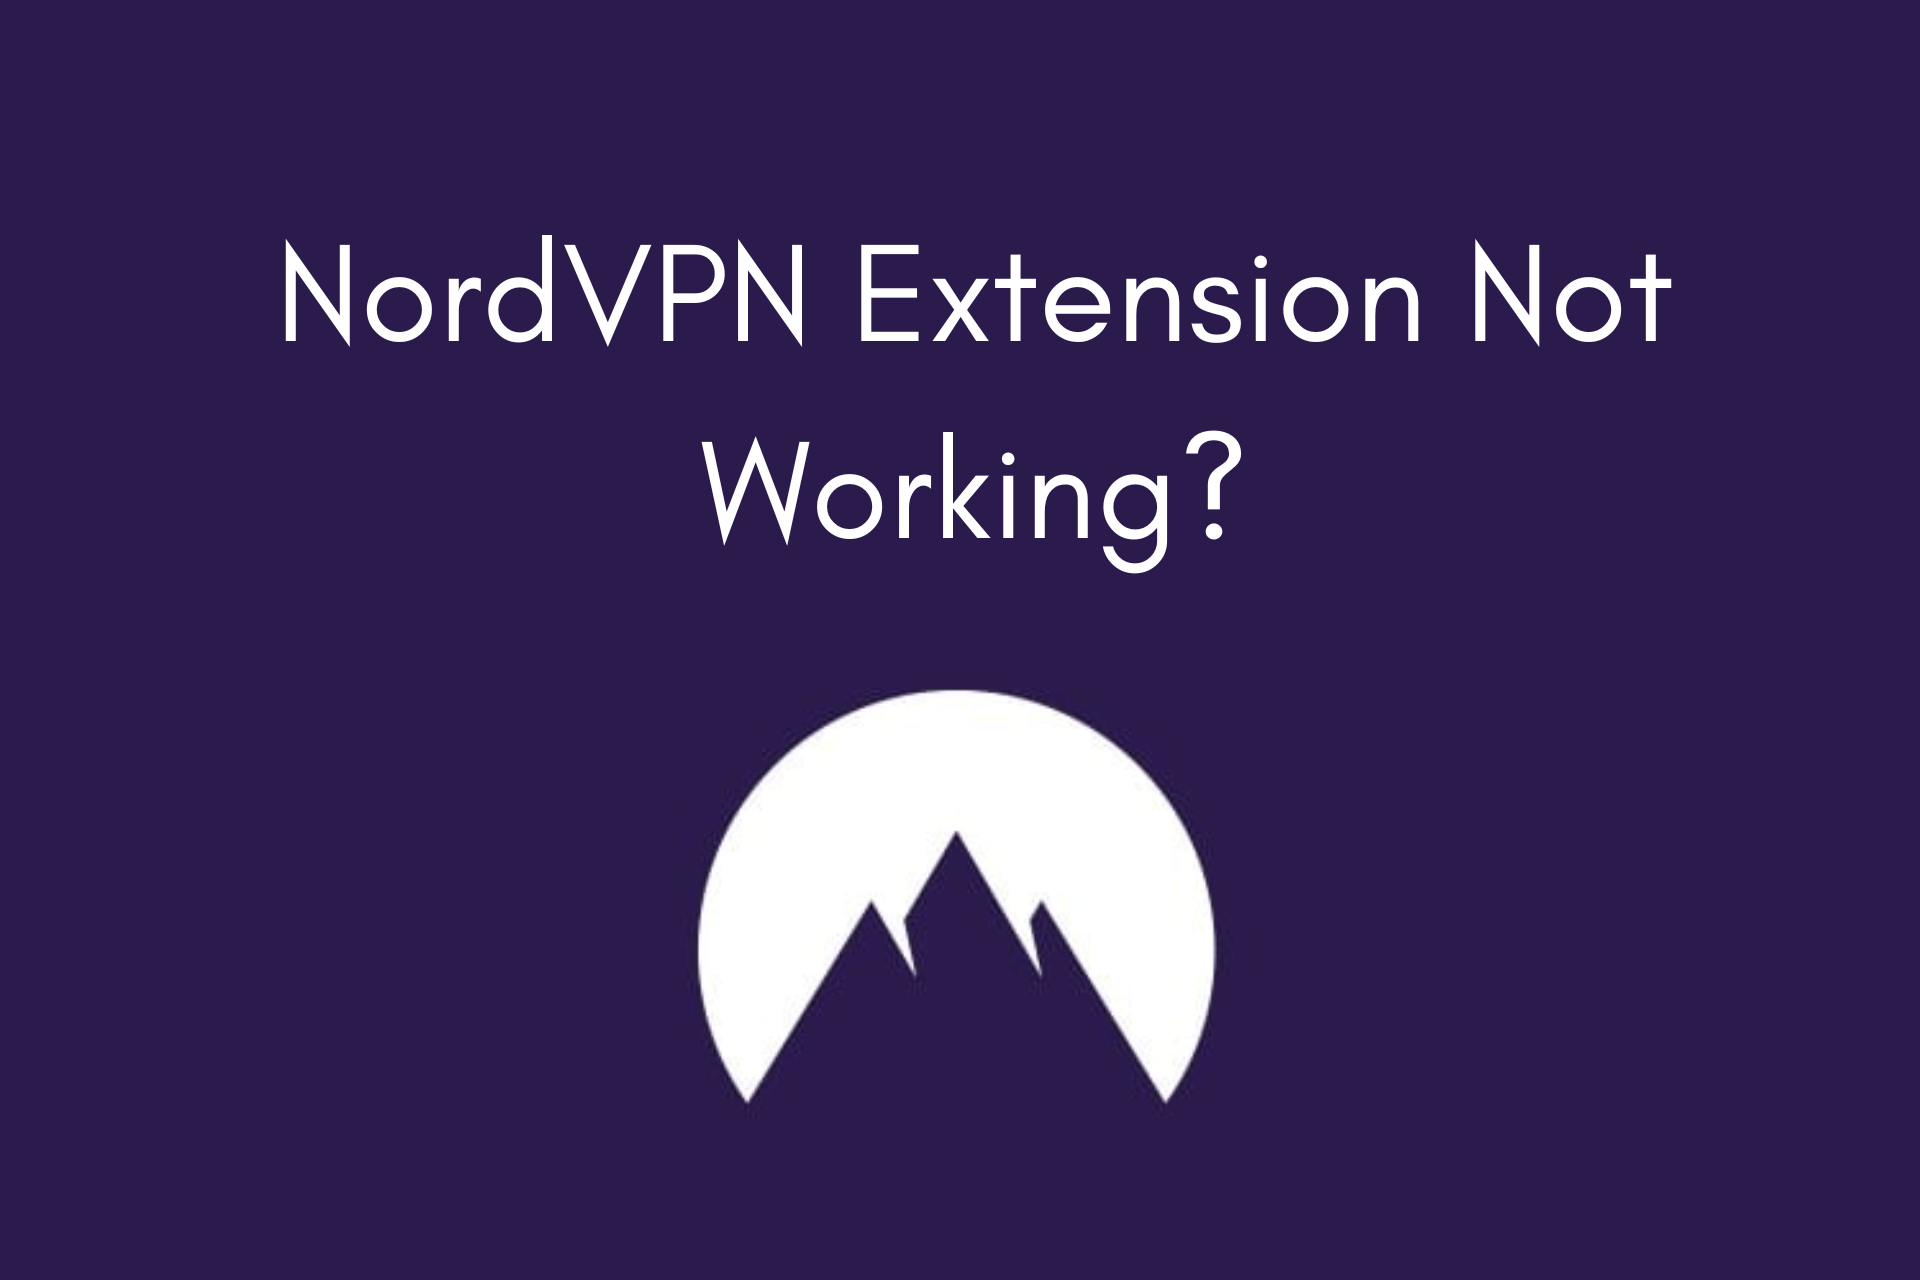 NordVPN Extension Not Working